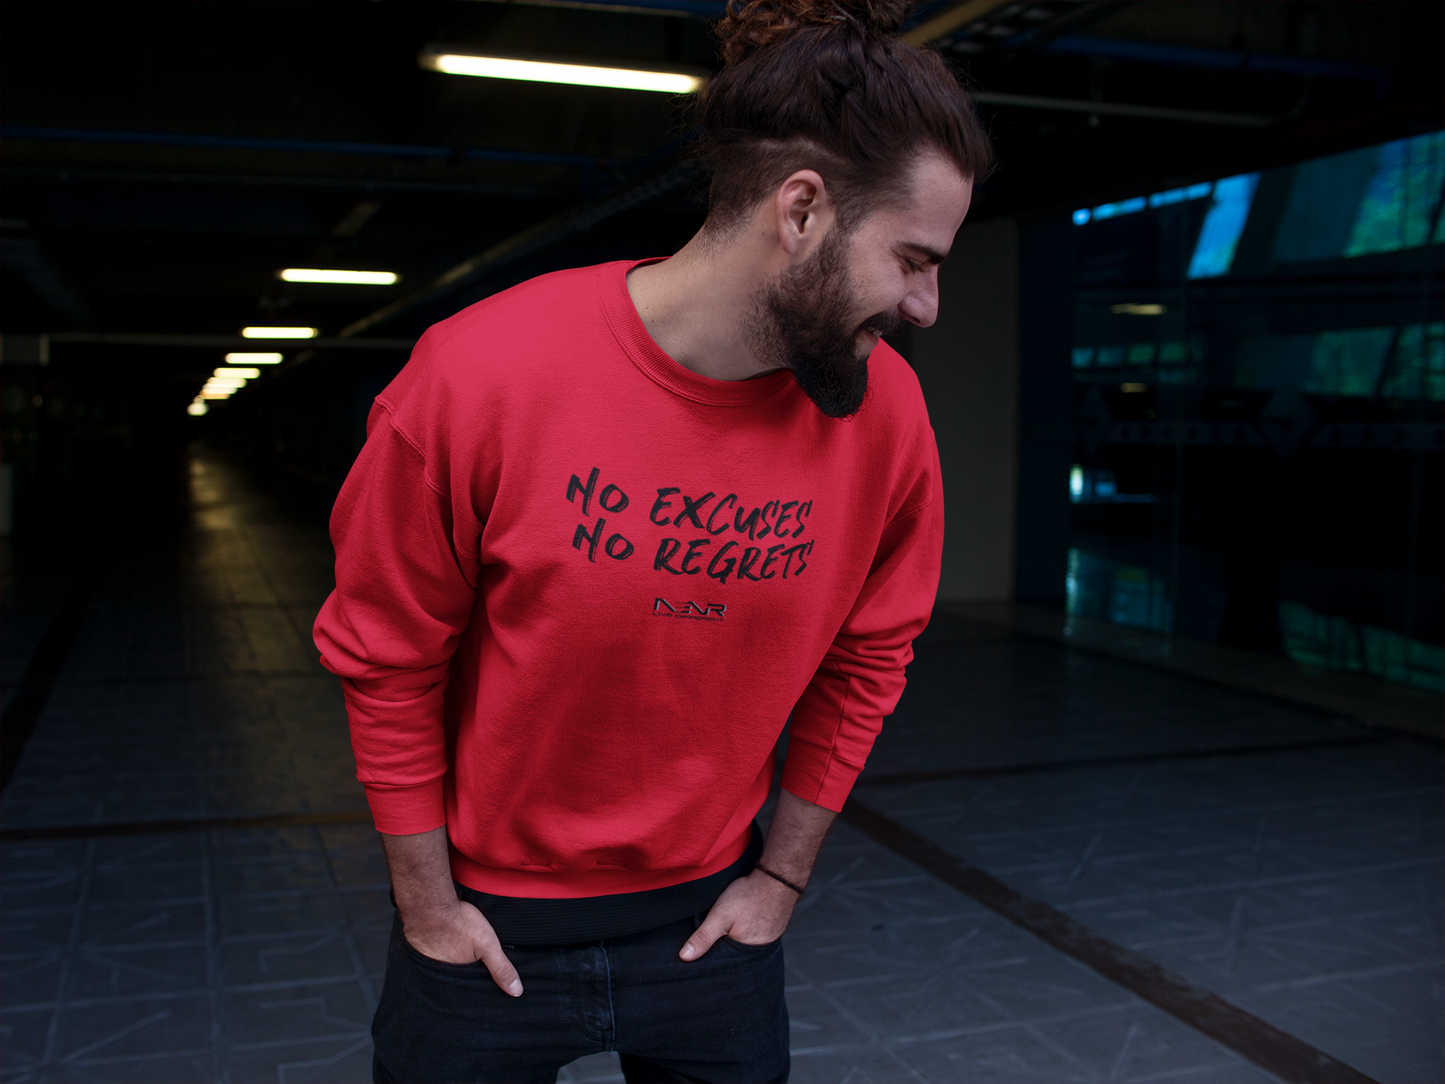 NO EXCUSES NO REGRETS SIGNATURE ~ Unisex Sweatshirt